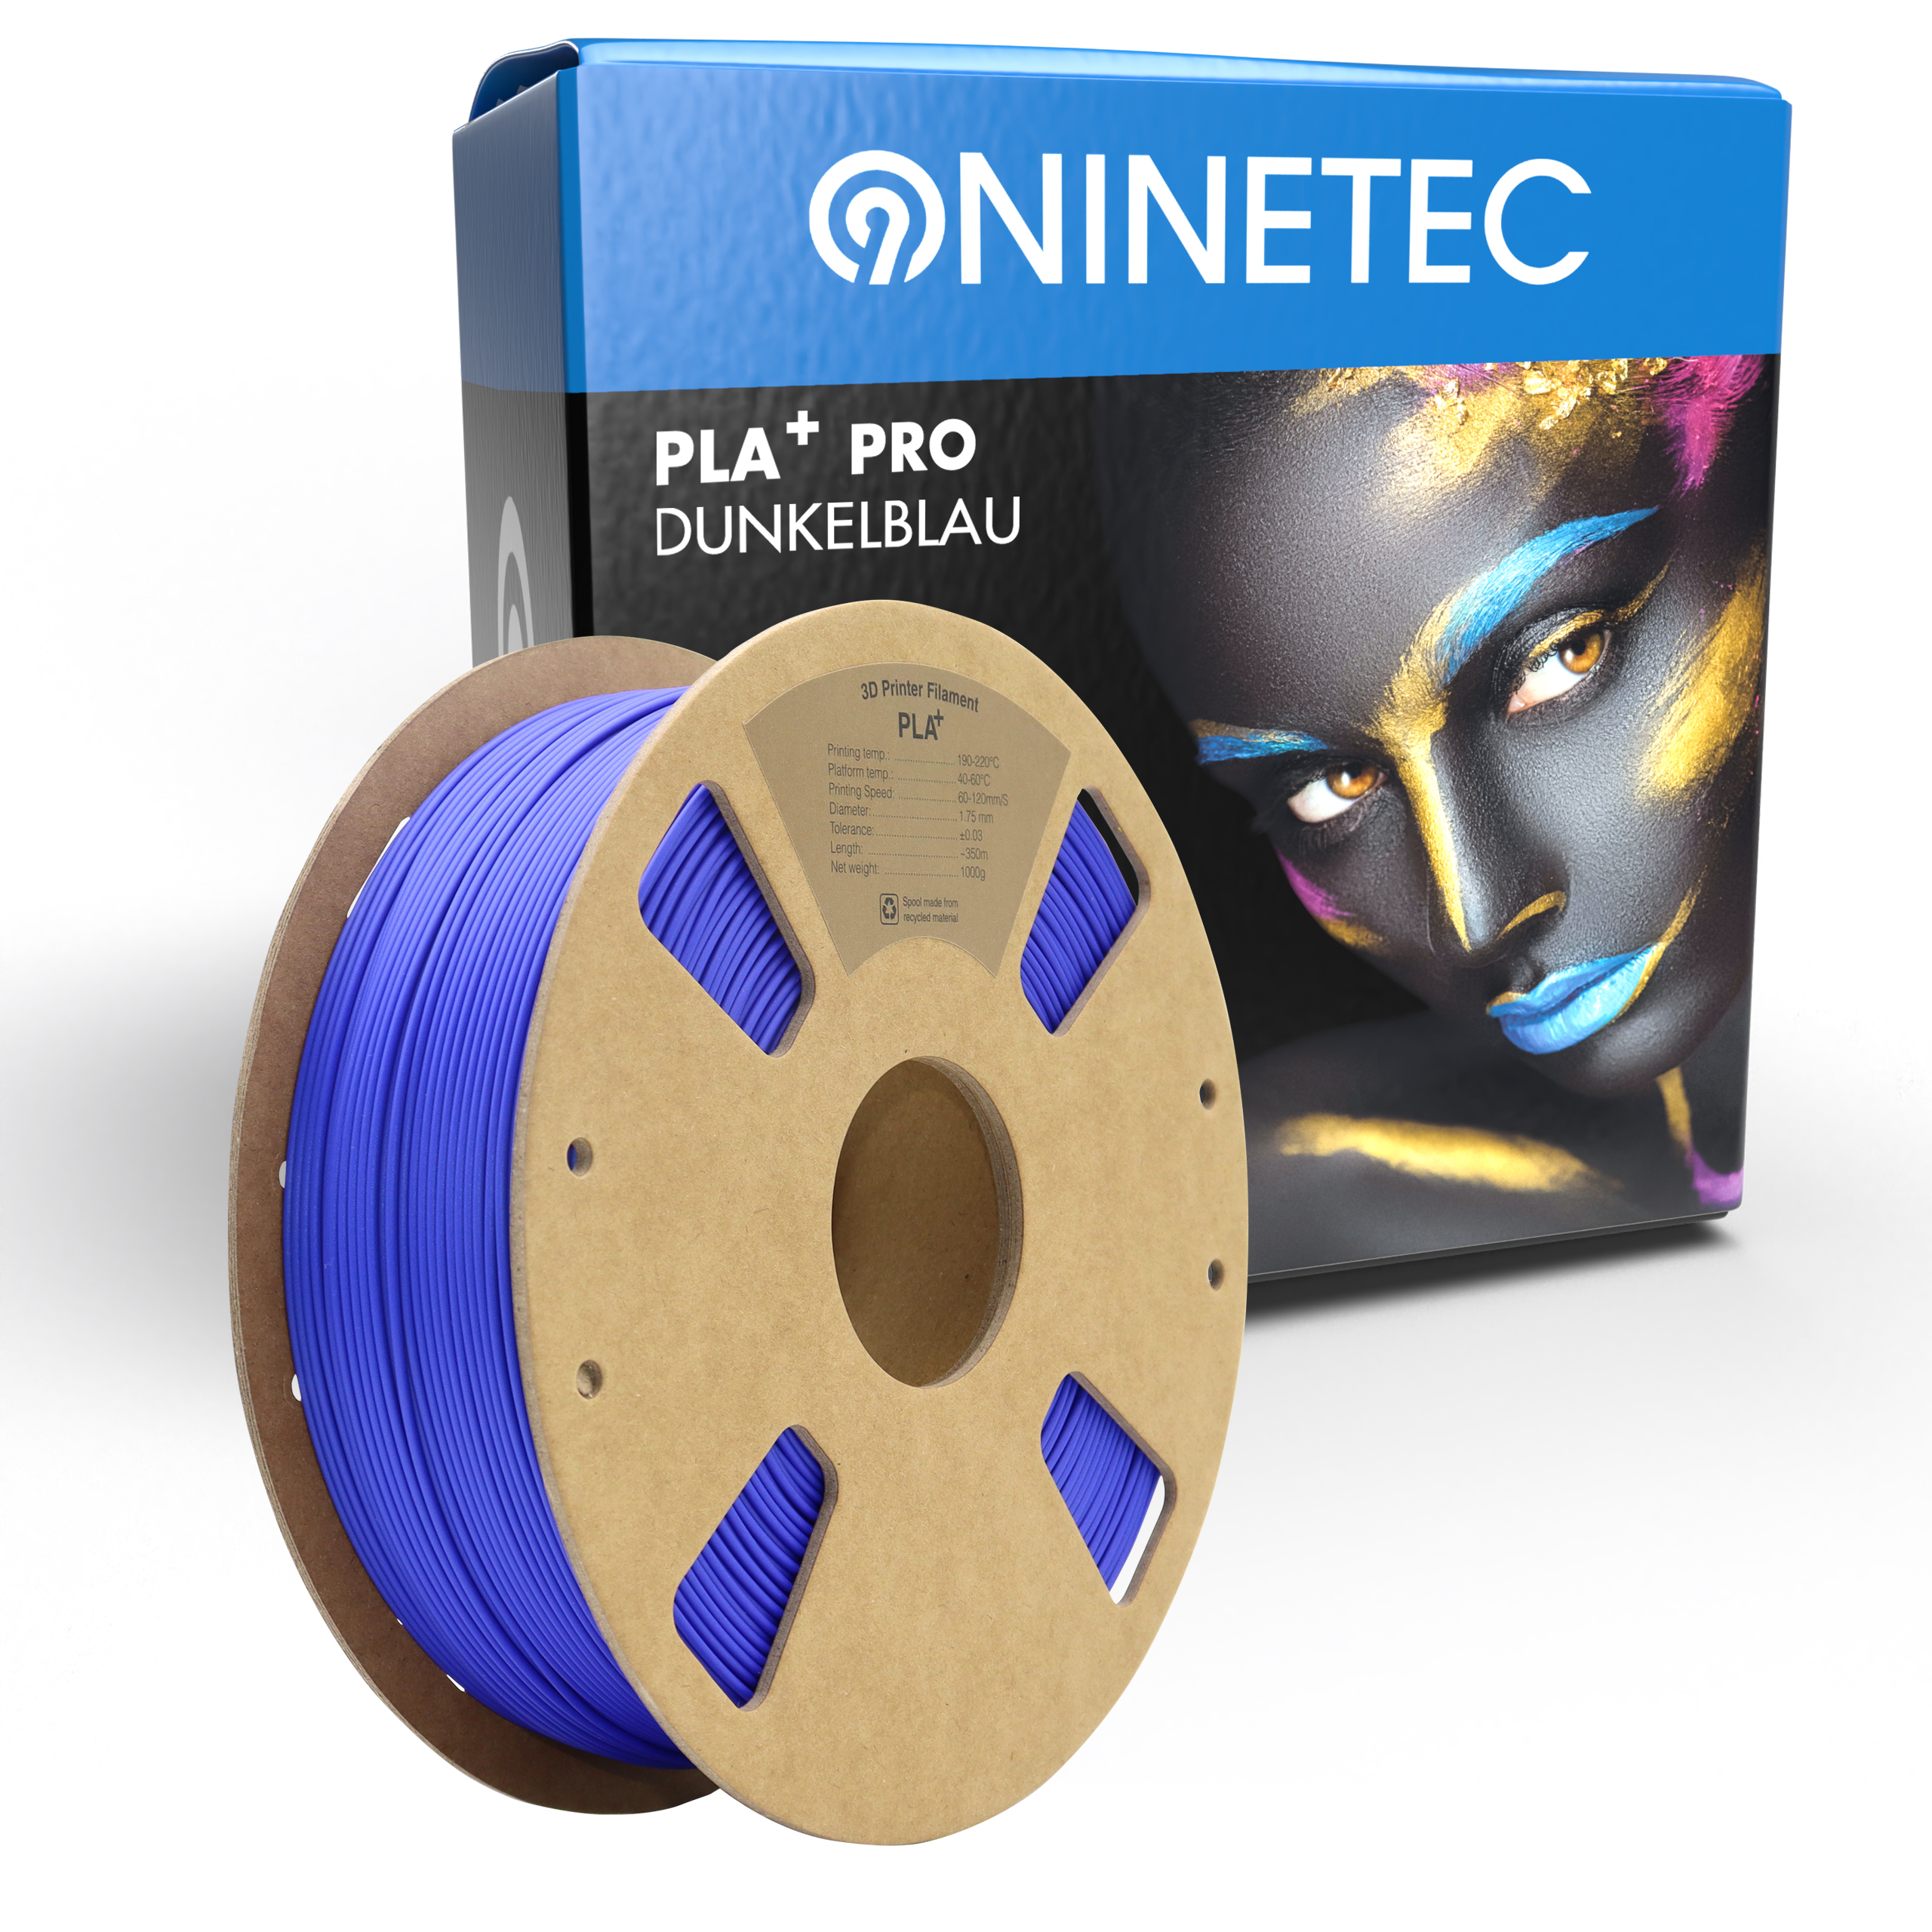 dunkelblau NINETEC PLA+ Filament PRO